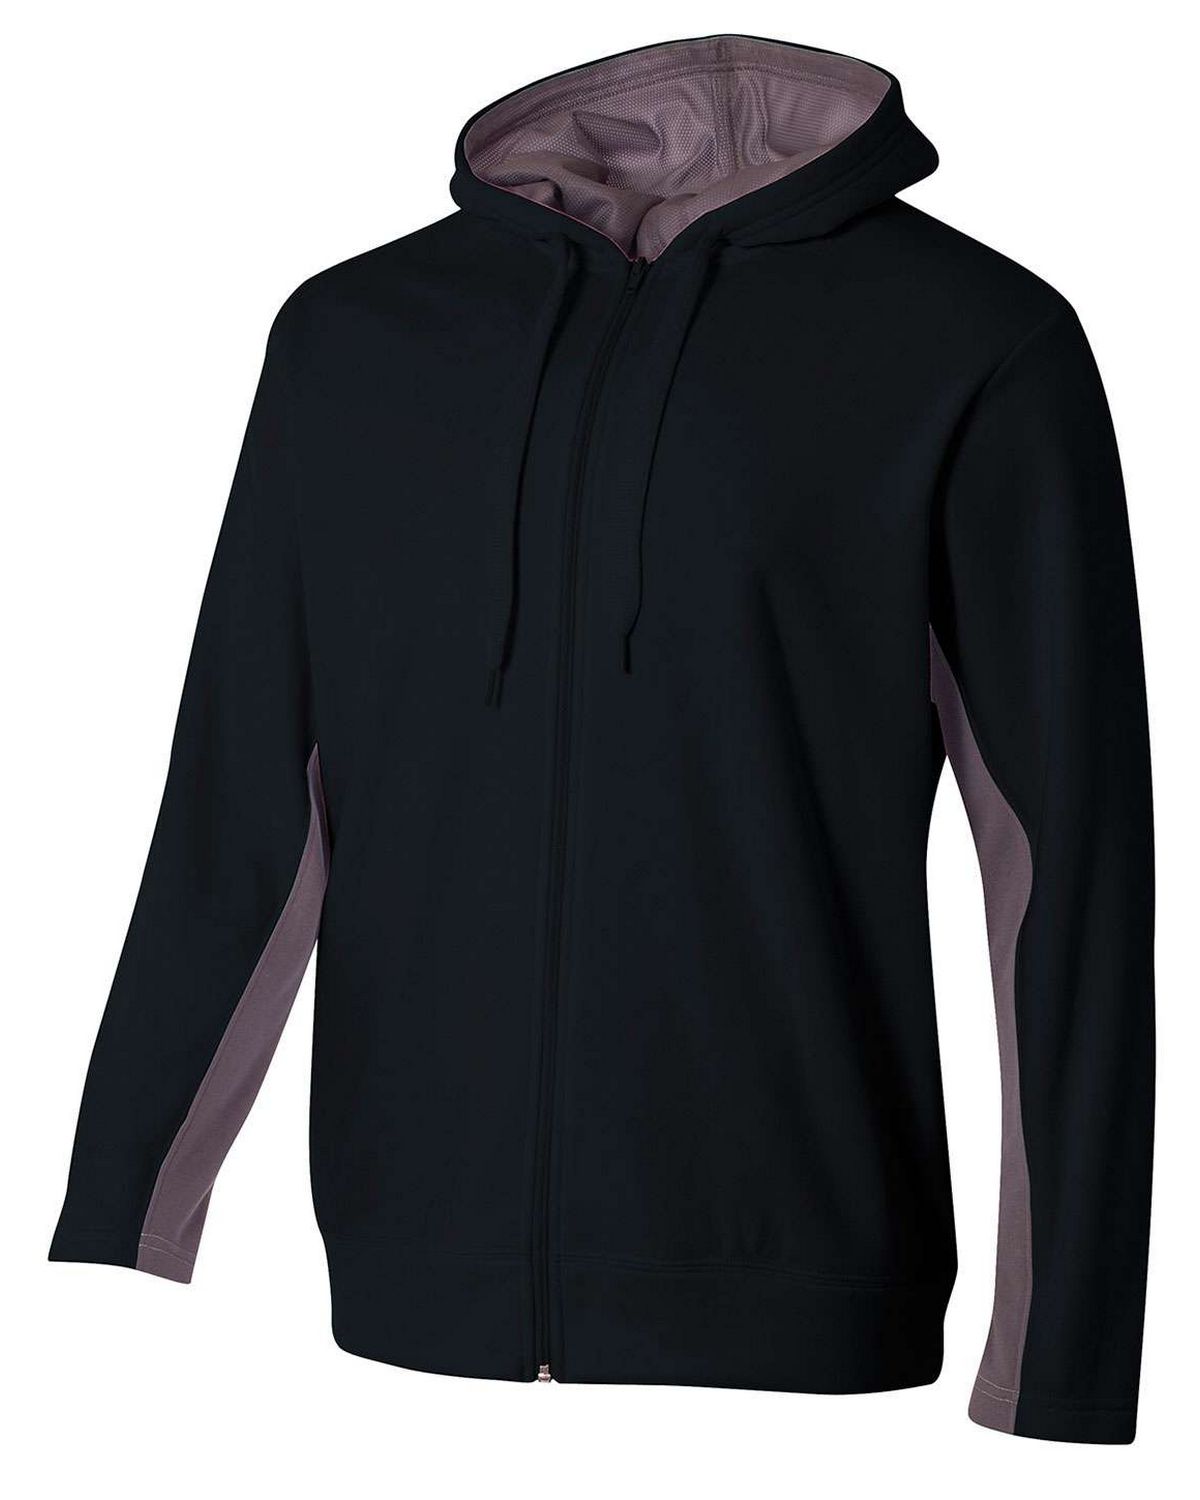 A4 N4251 Men's Tech Fleece Full Zip Hooded Sweatshirt